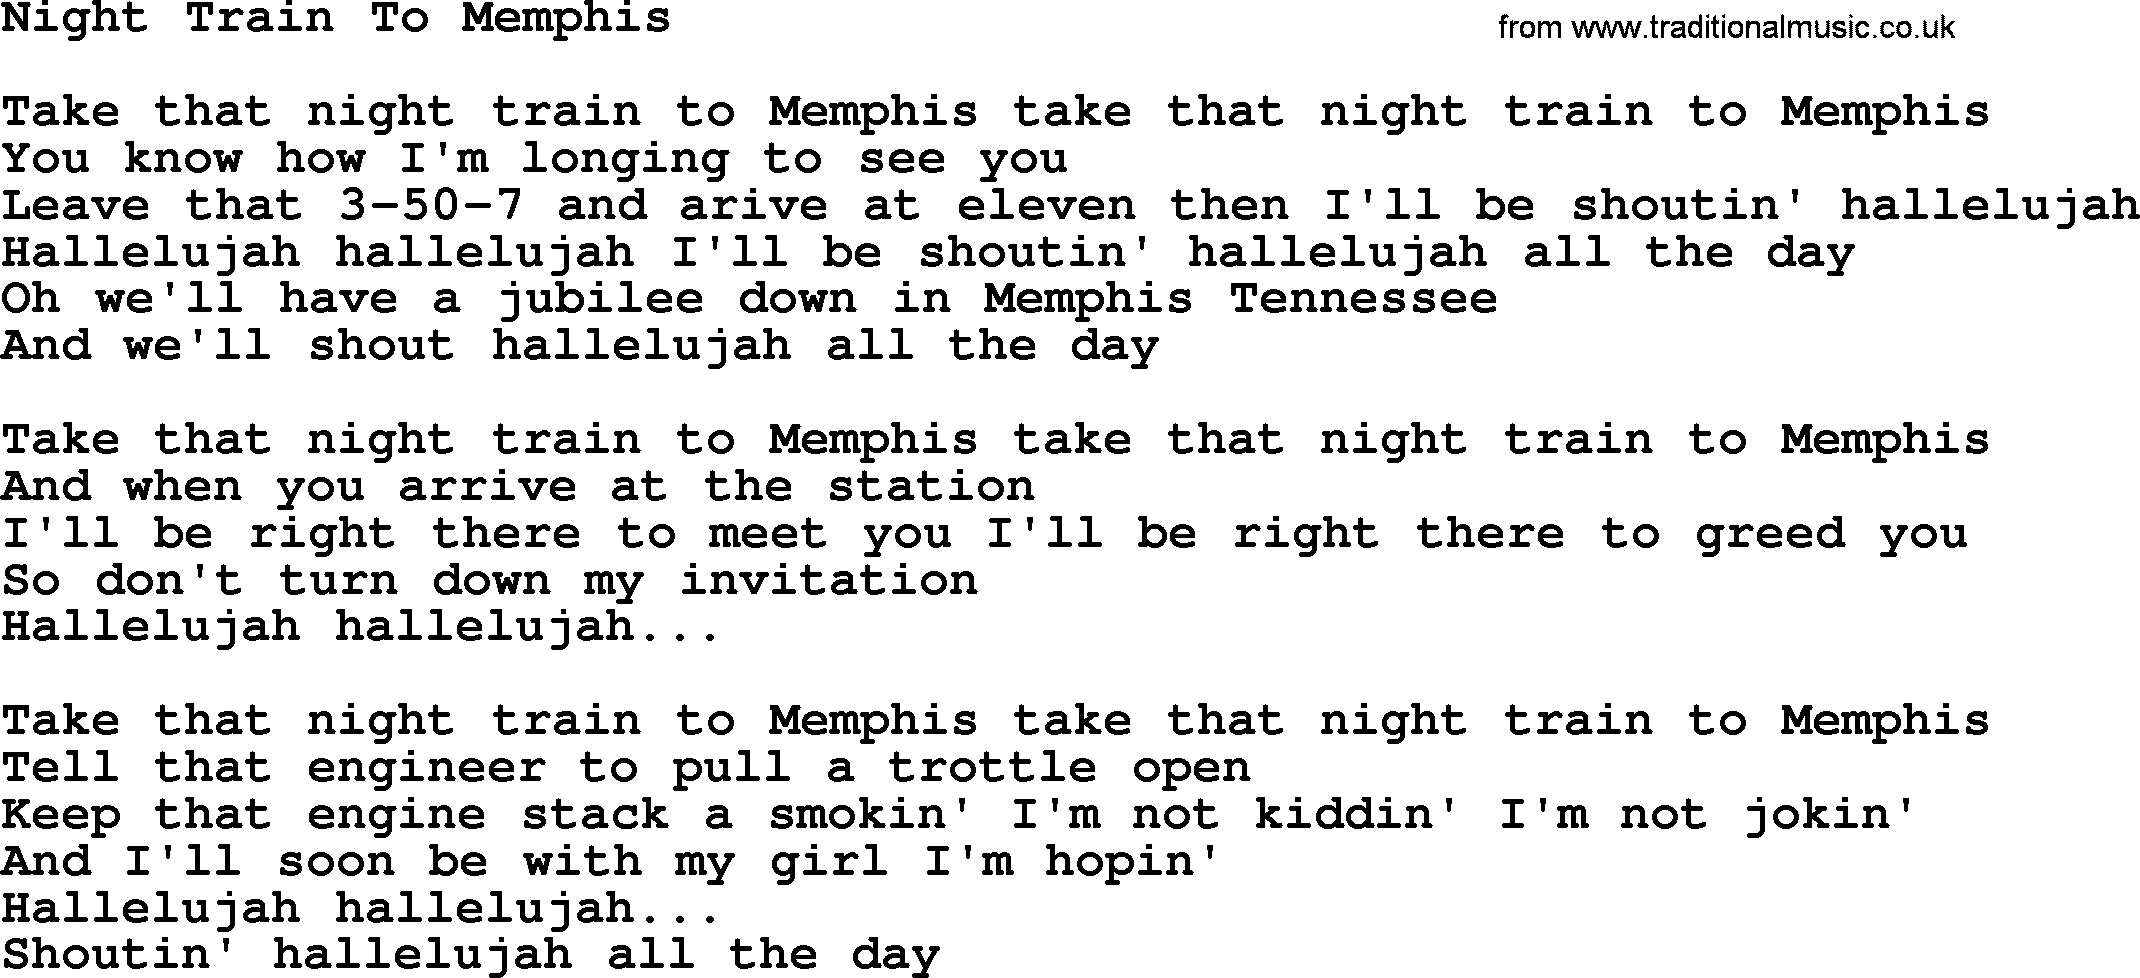 Dolly Parton song Night Train To Memphis.txt lyrics